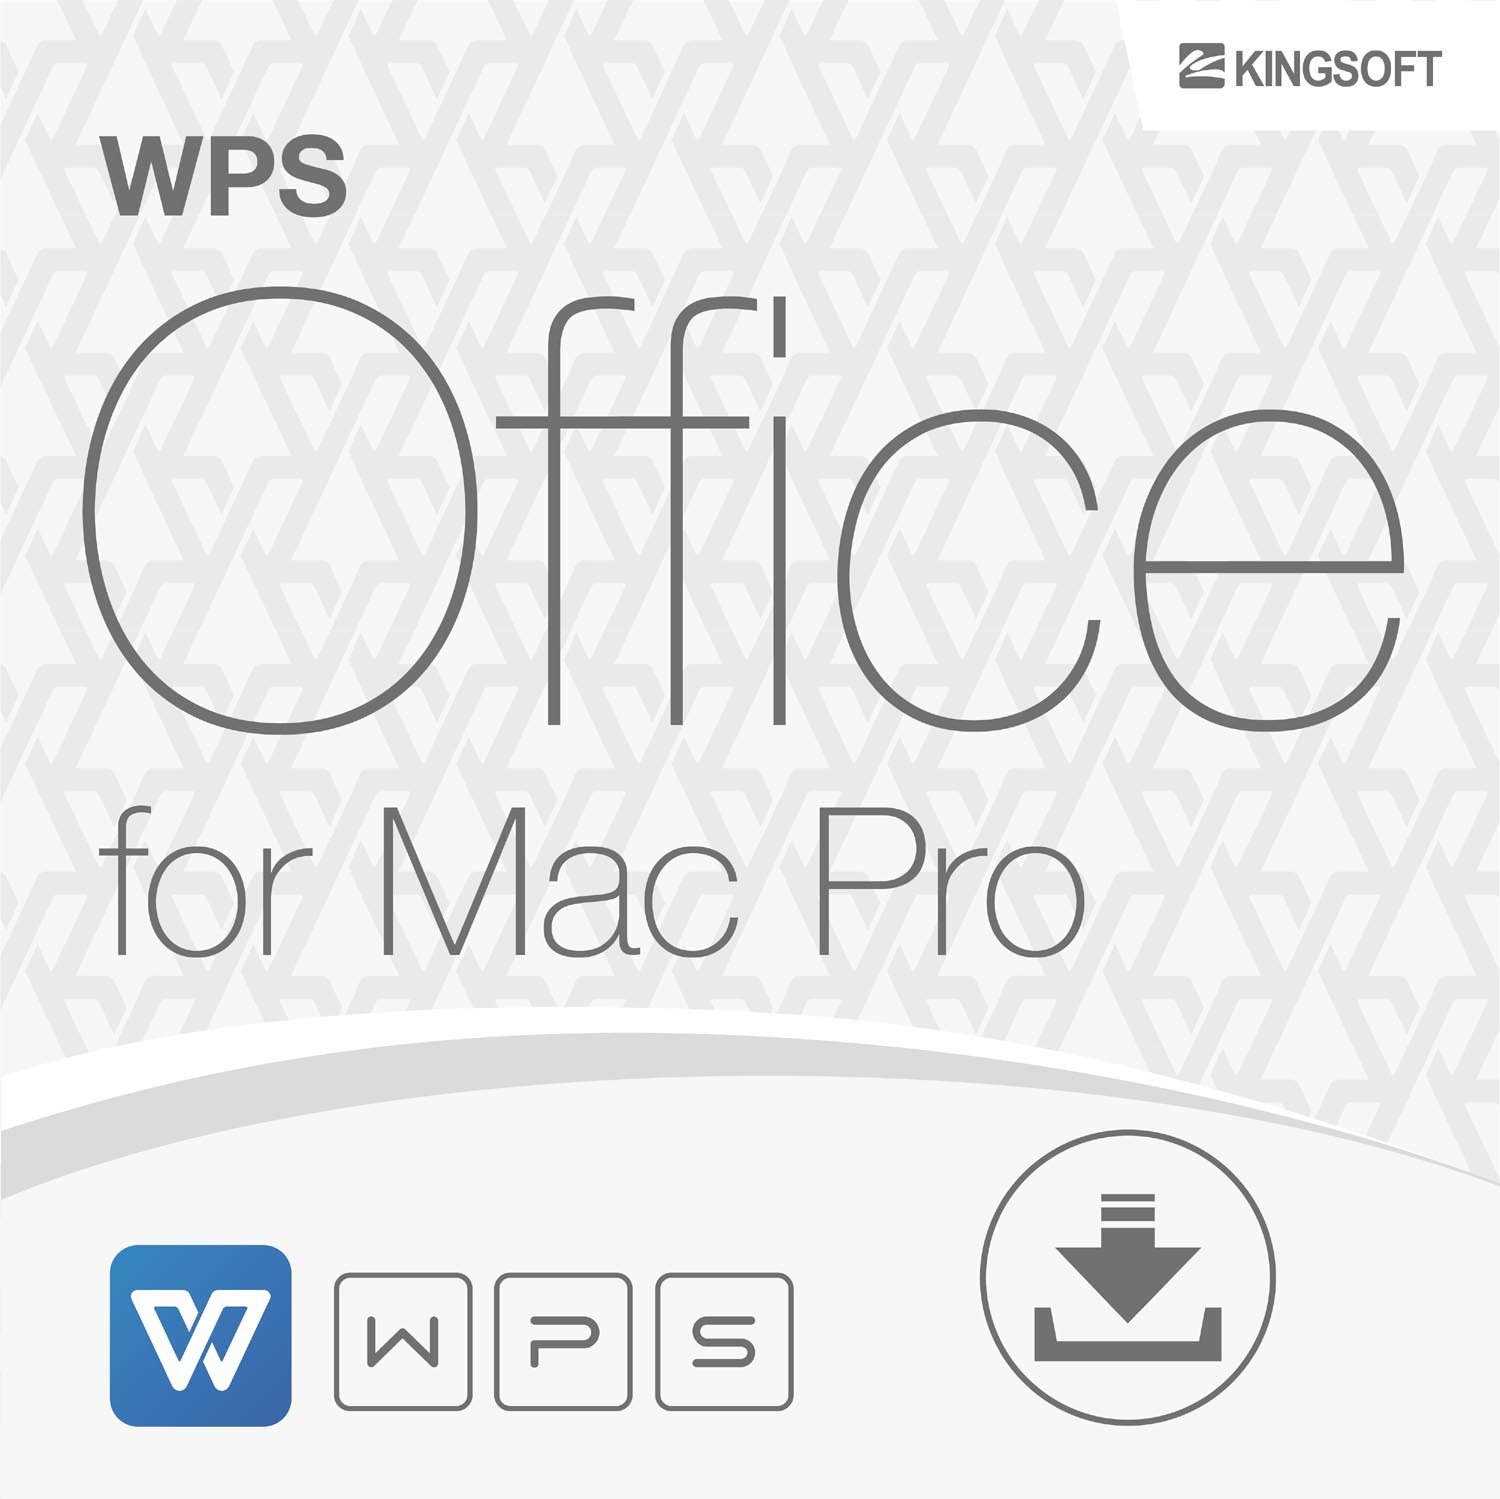 wps office for mac osfor mac